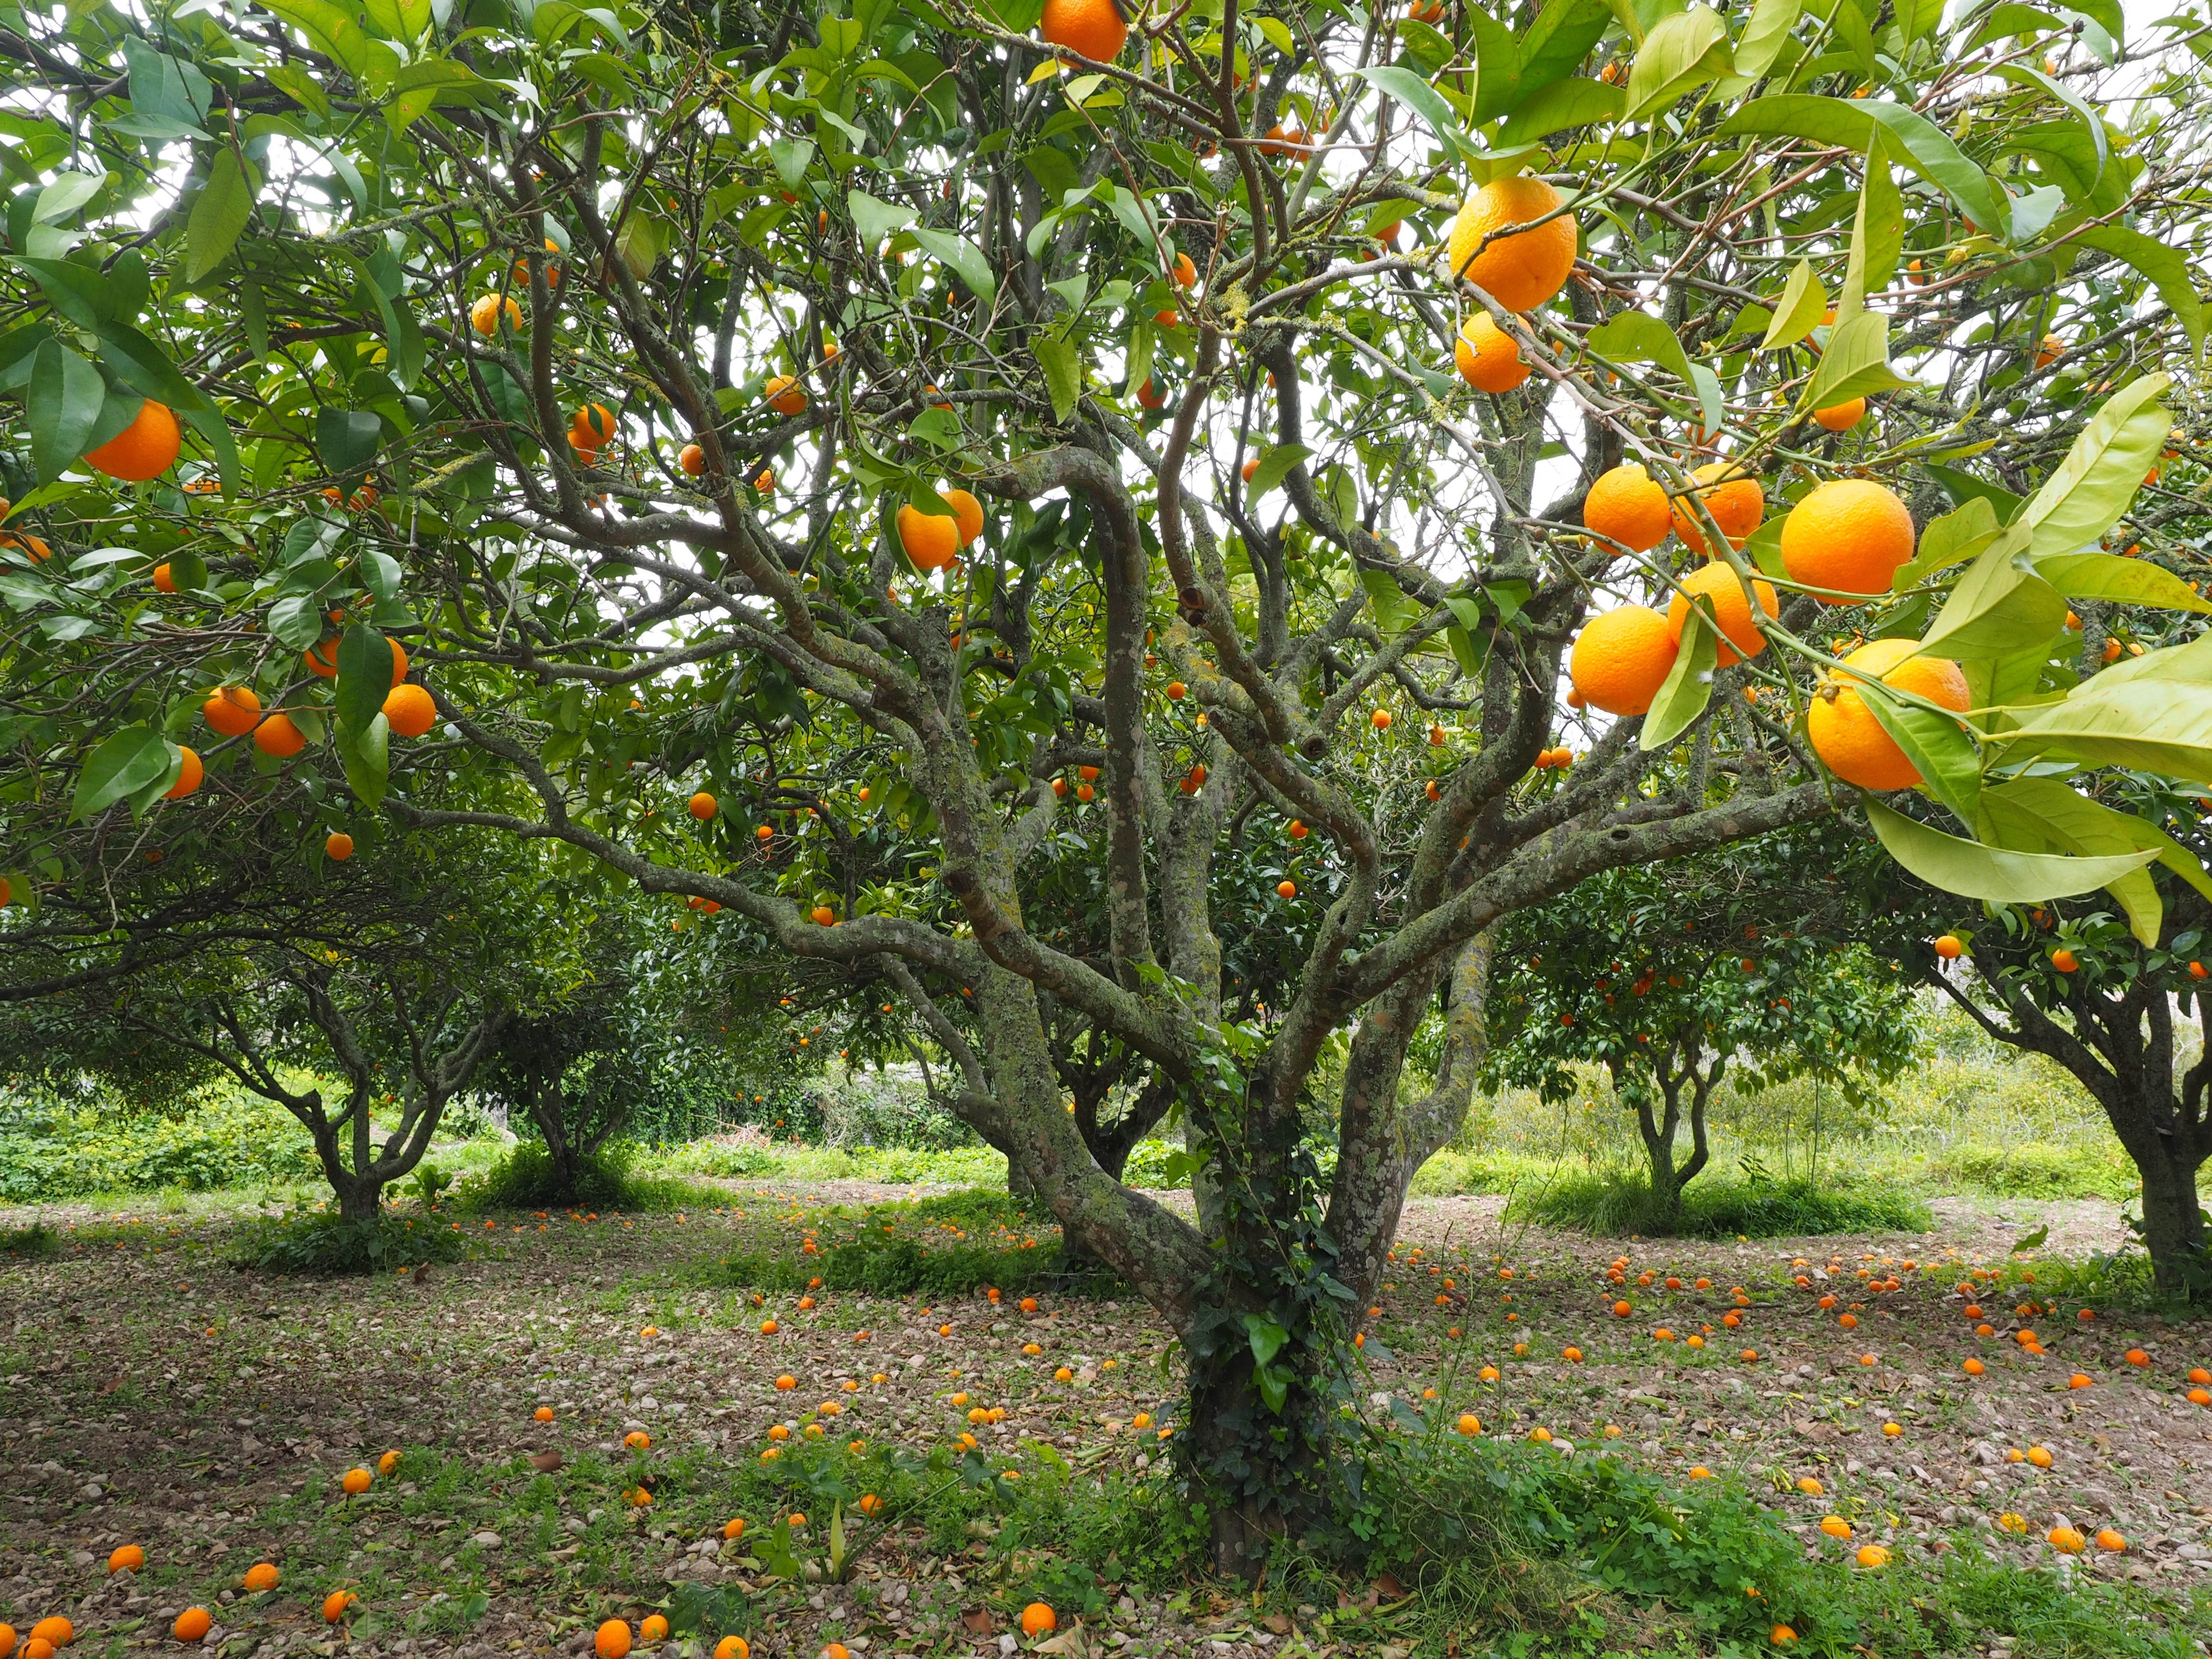 File:Orange-tree-1117423.jpg - Wikimedia Commons